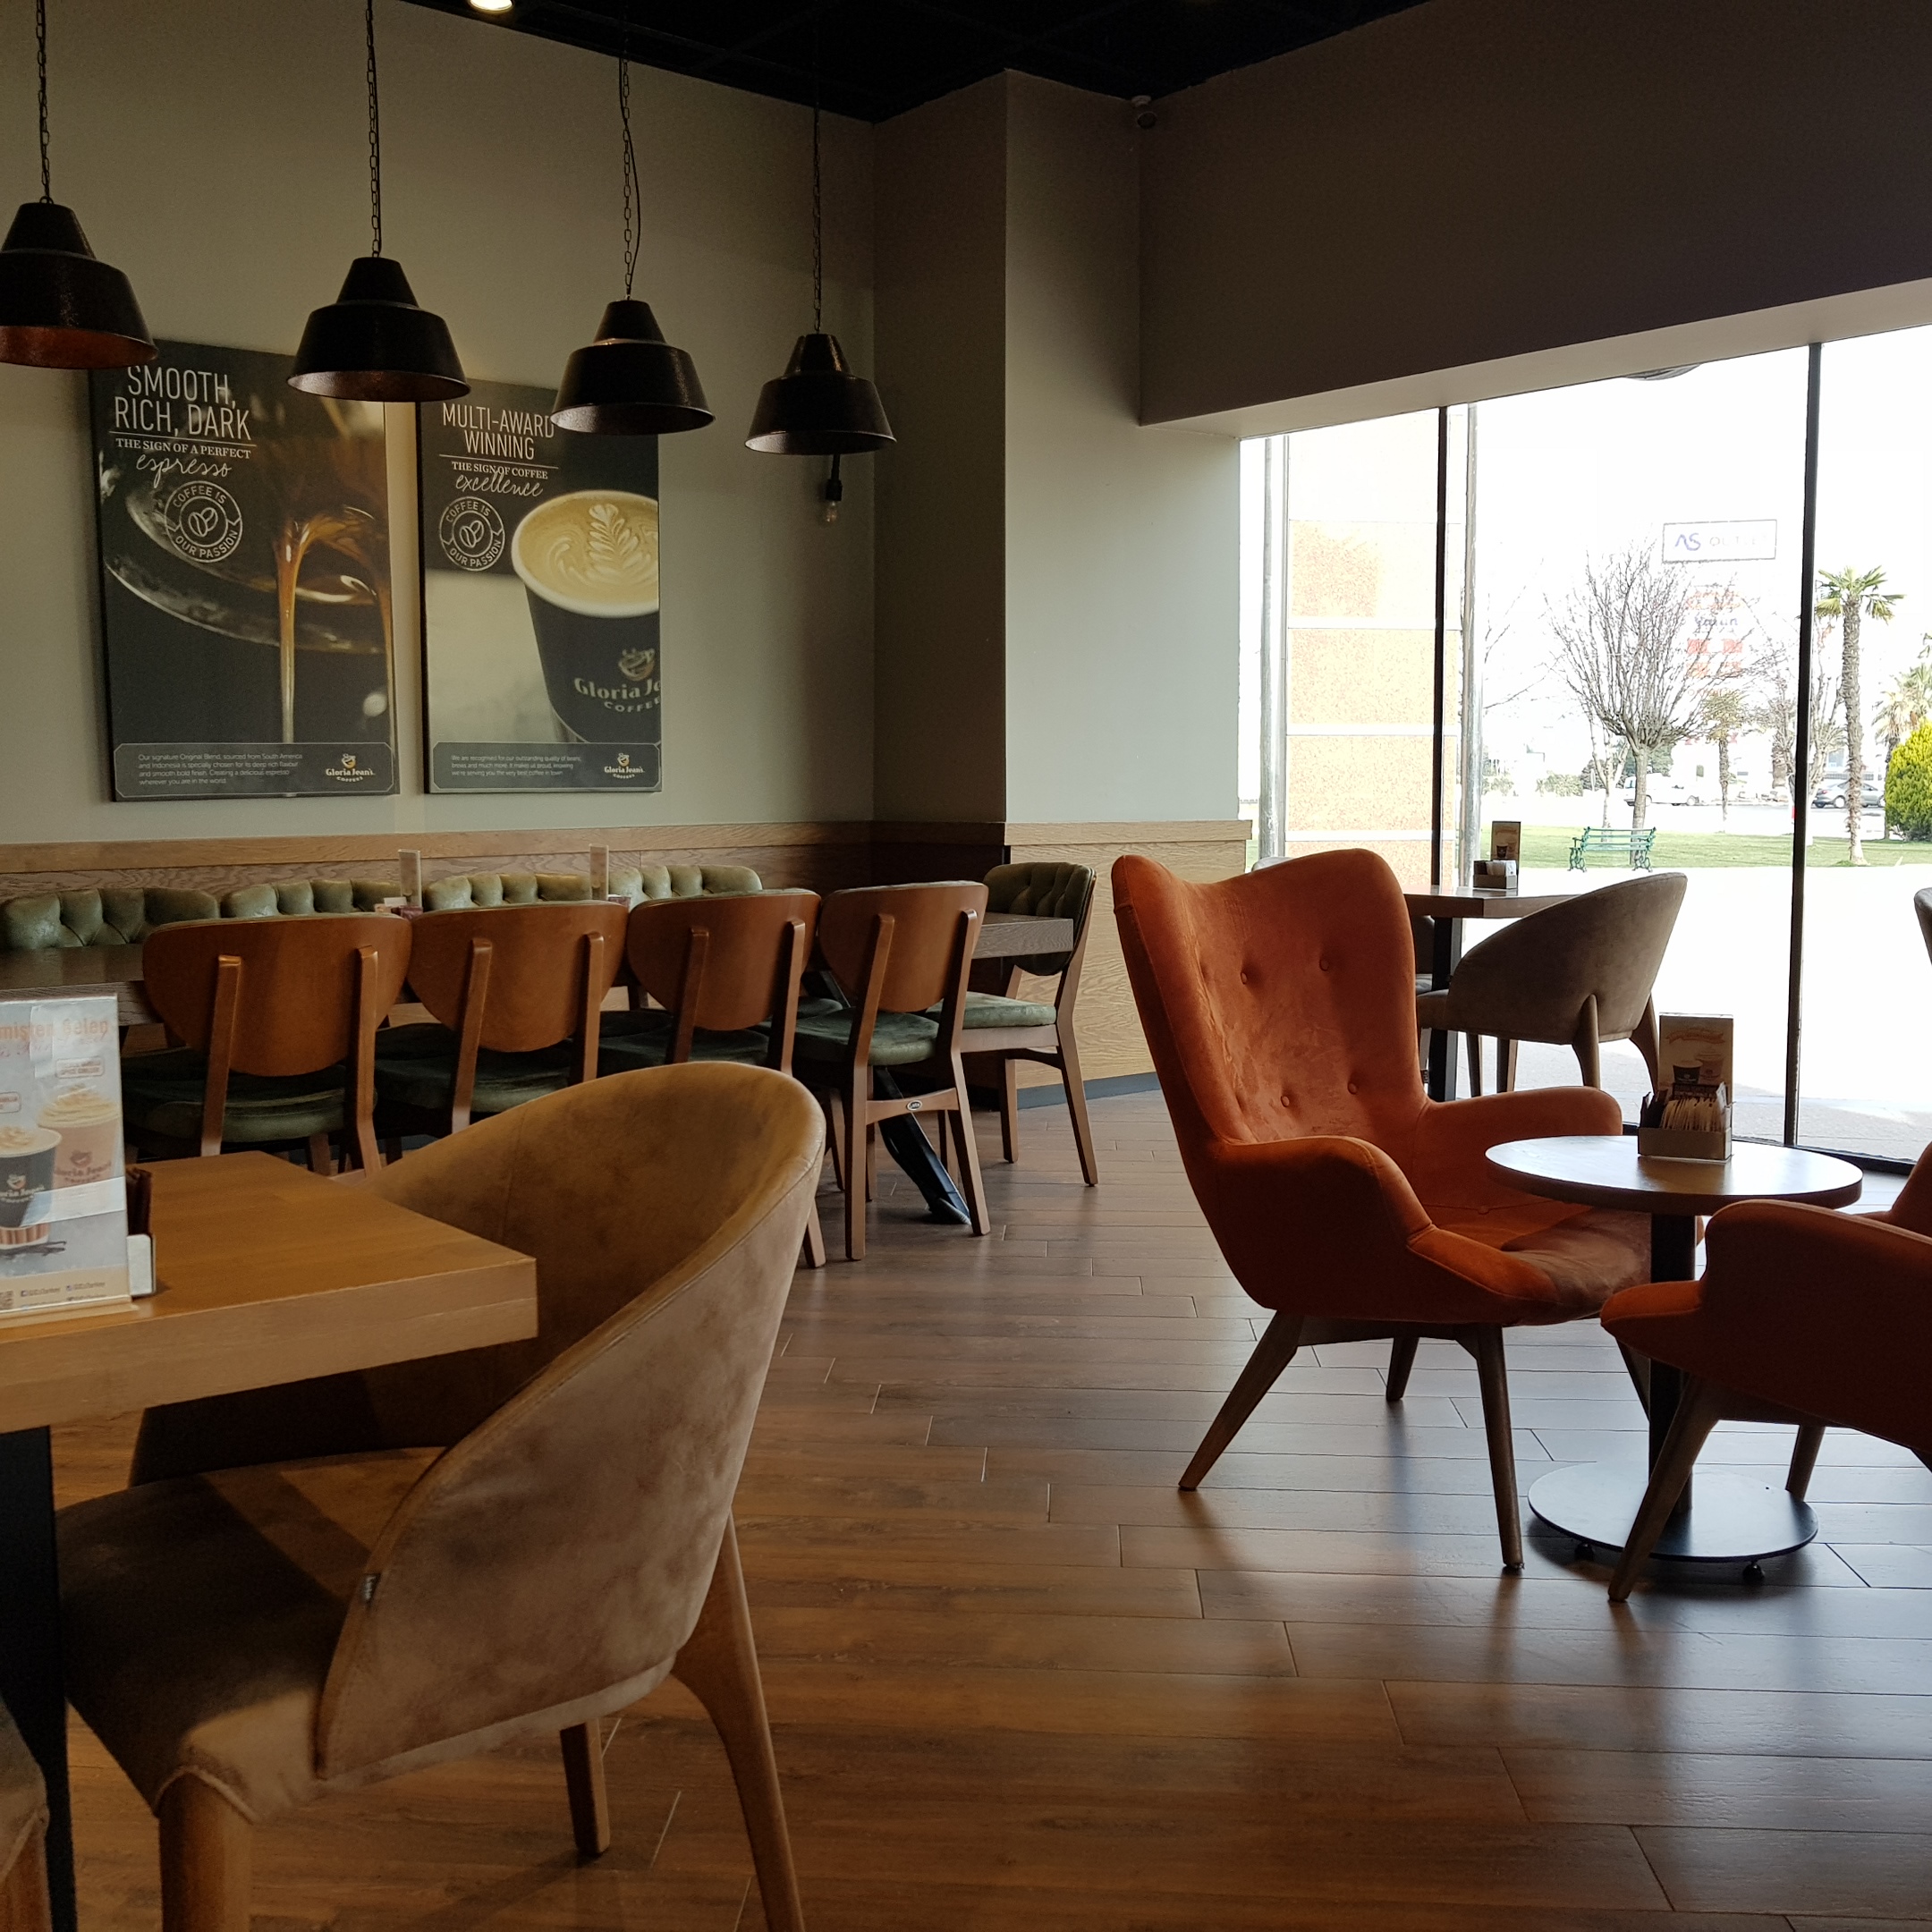 cafe furniture2 by seatupturkey.jpg